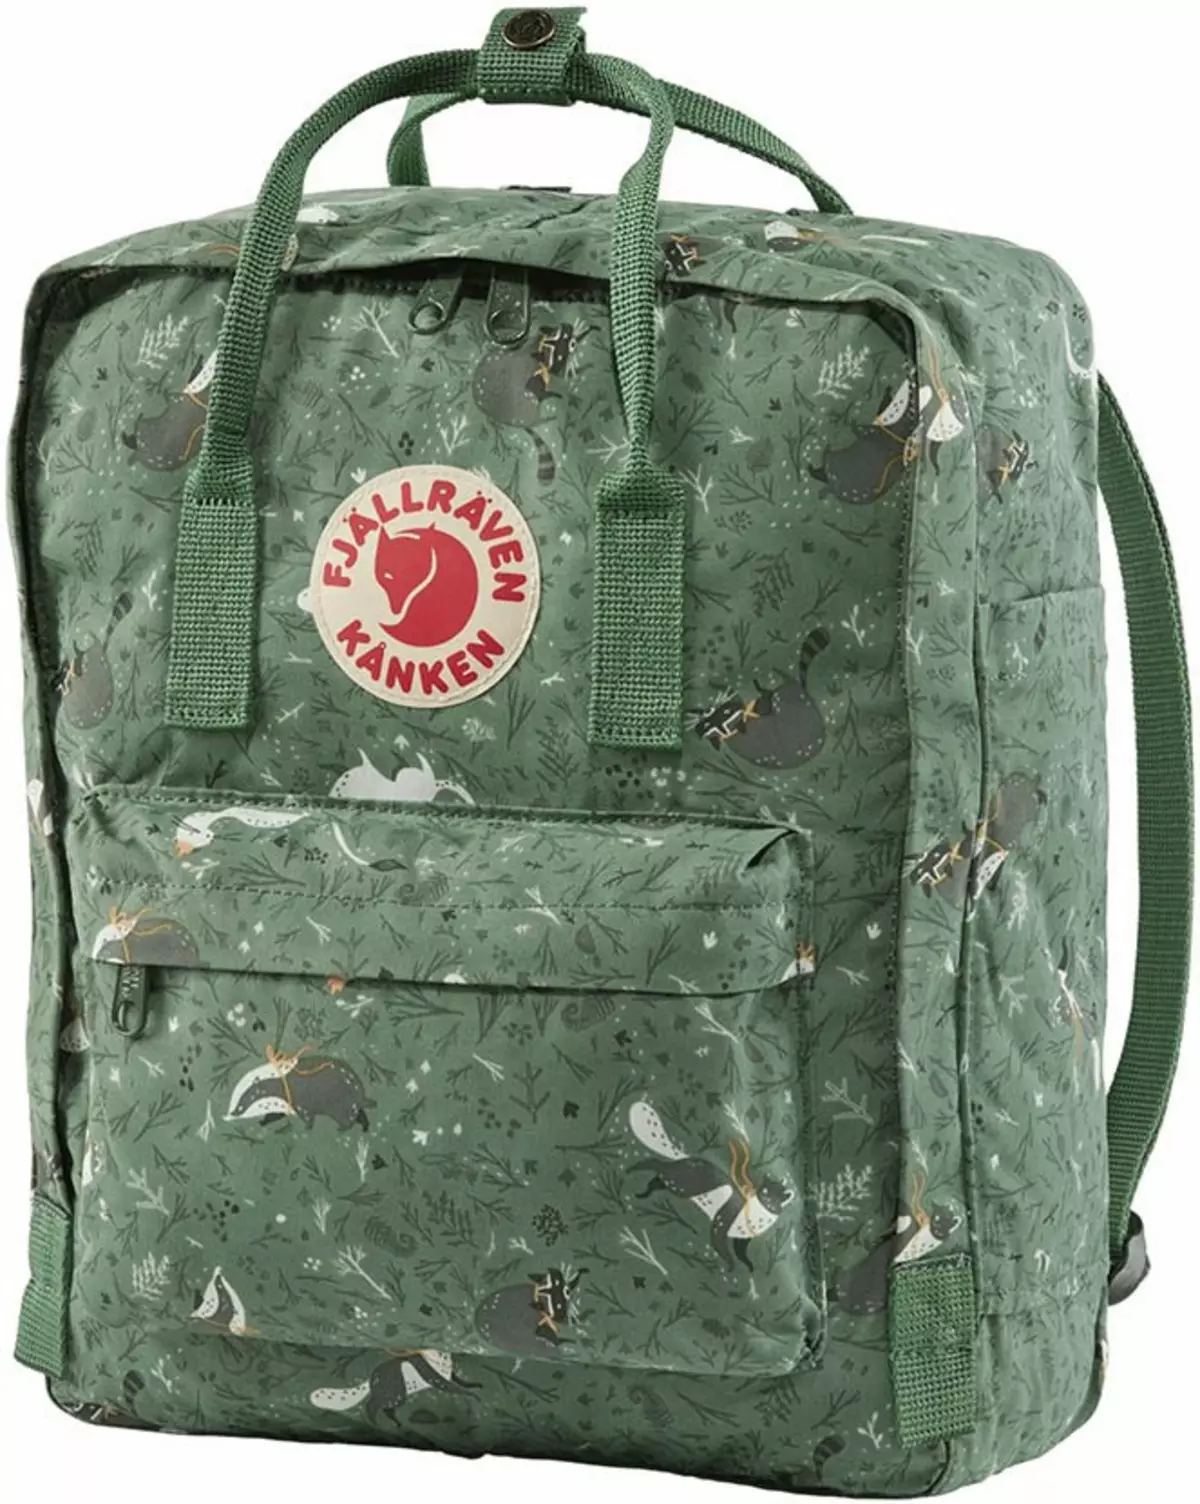 Kanken Backpacks untuk sekolah: Apa yang lebih baik dipakai ke sekolah? Tinjauan ransel sekolah untuk remaja. Apa yang lebih baik untuk dibeli? Ransel modis untuk anak perempuan 23691_5